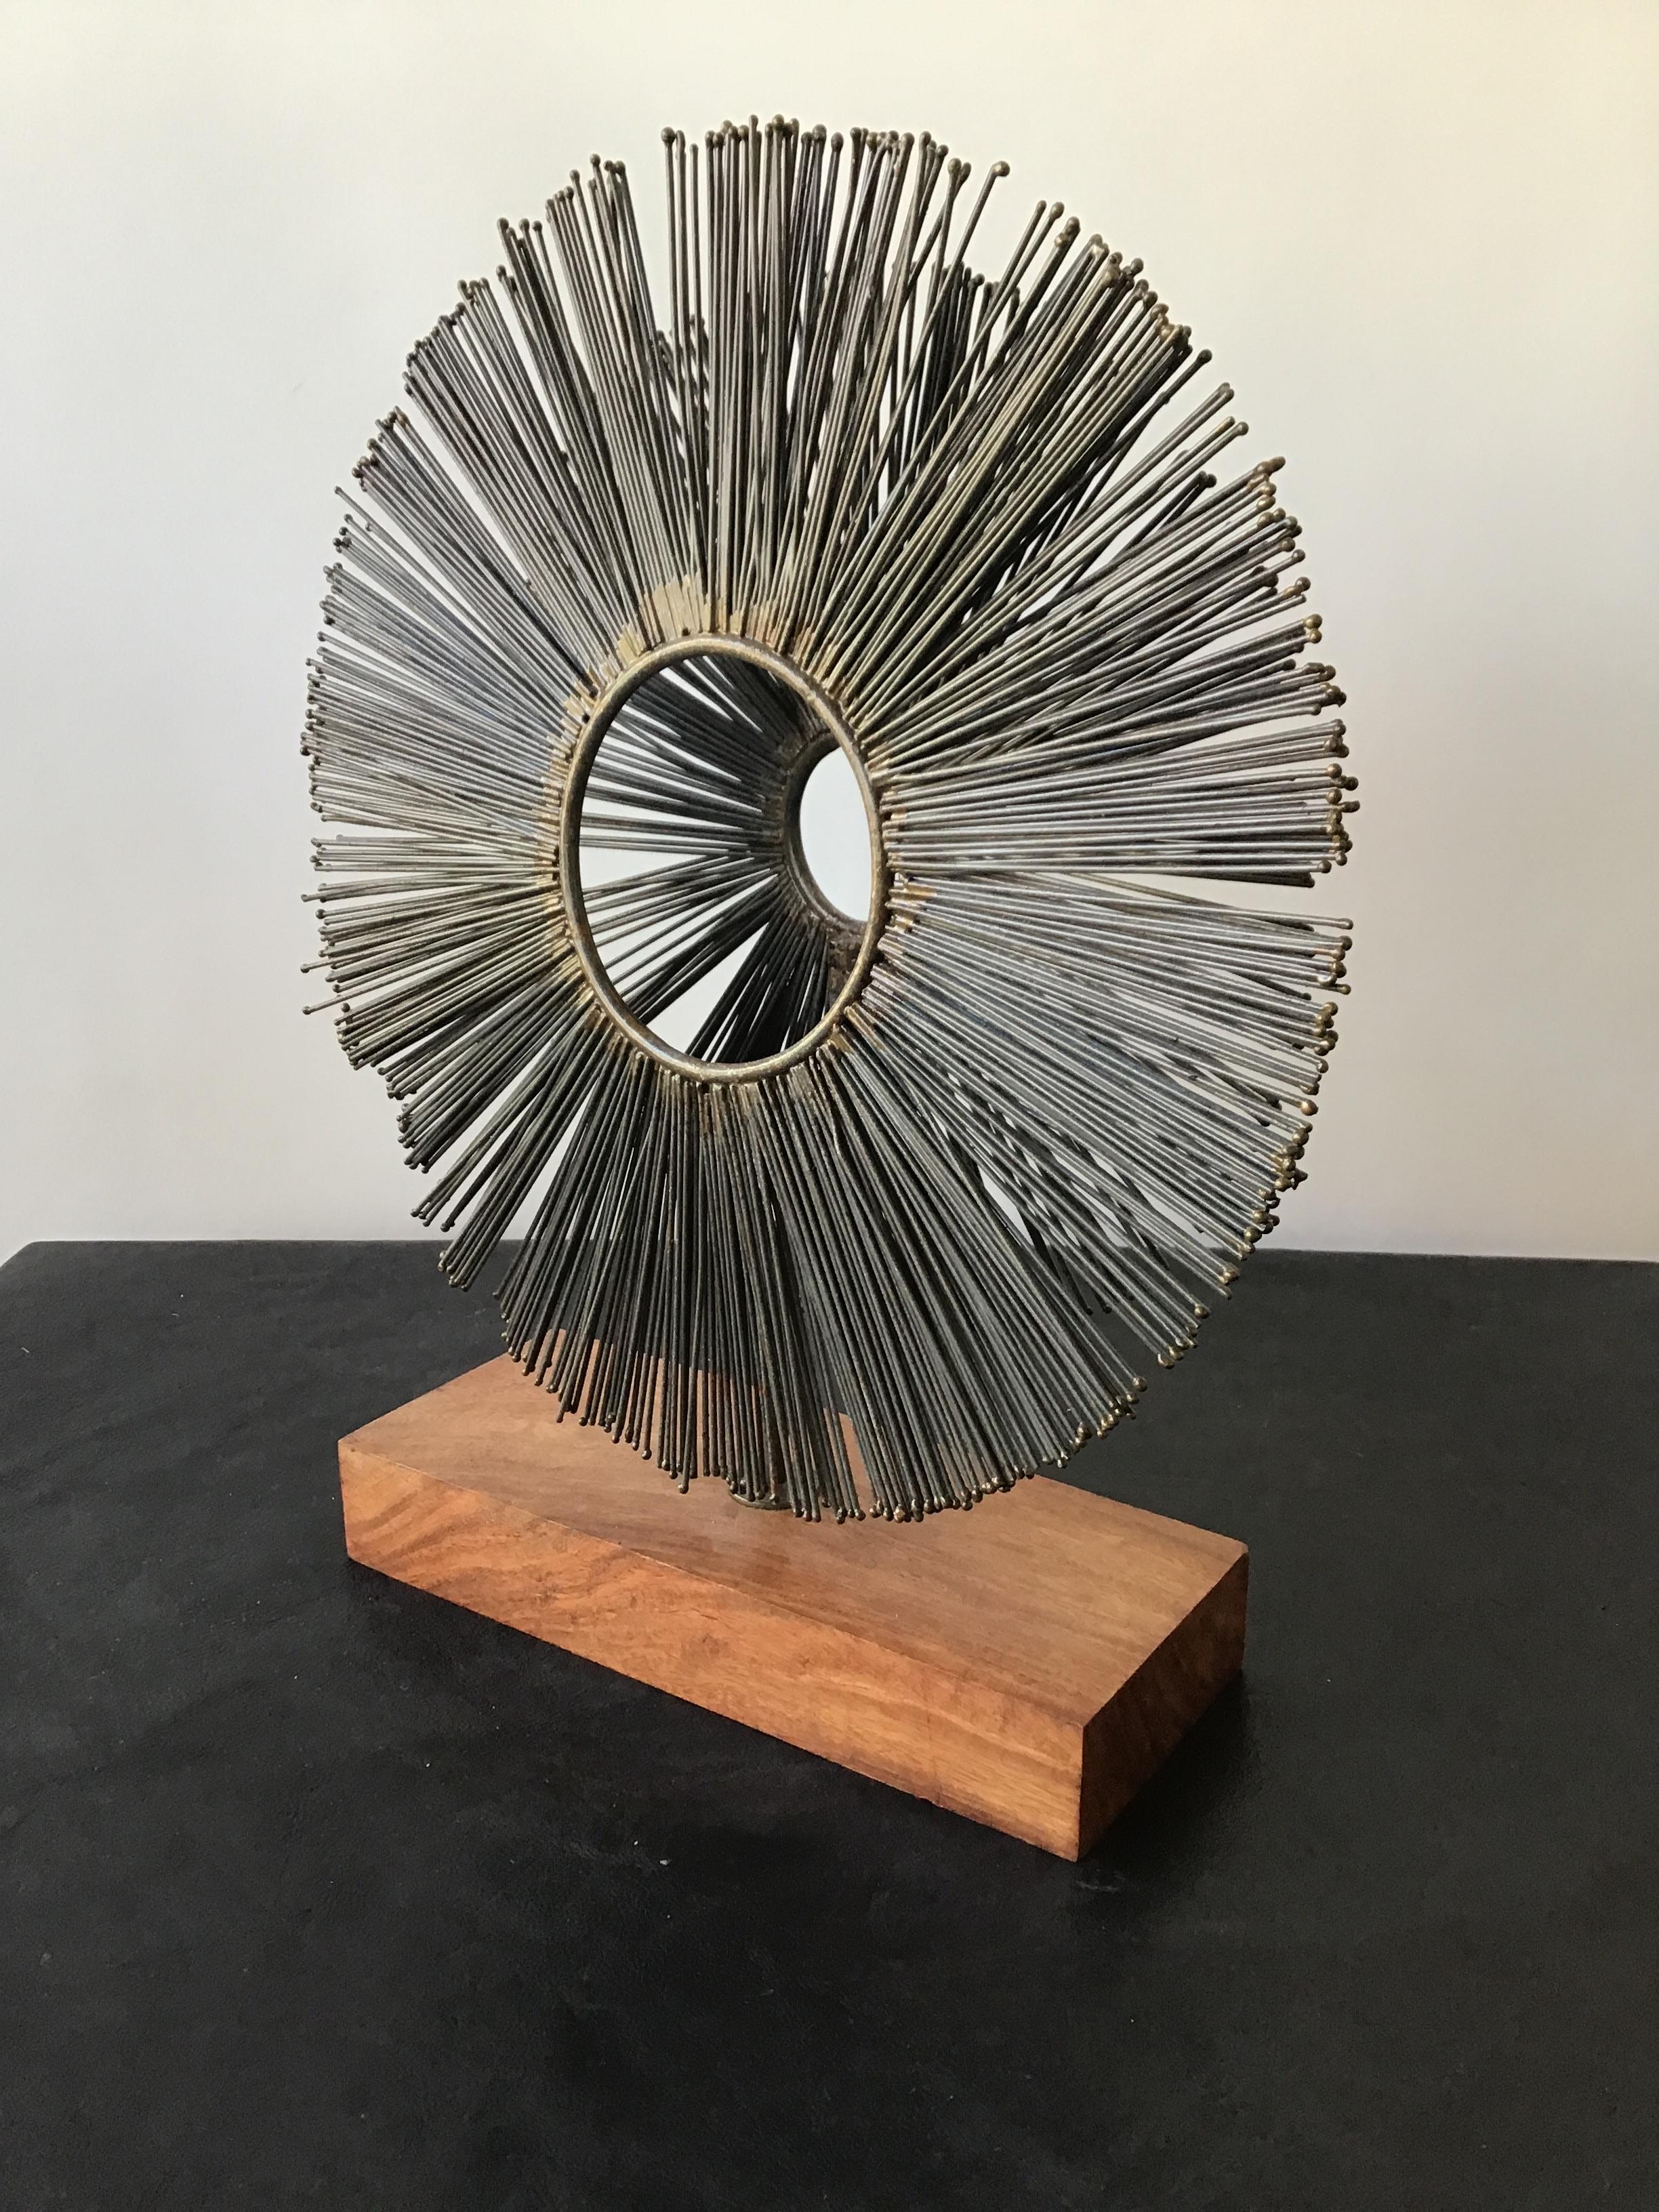 Double metal sunburst sculpture on wood base.